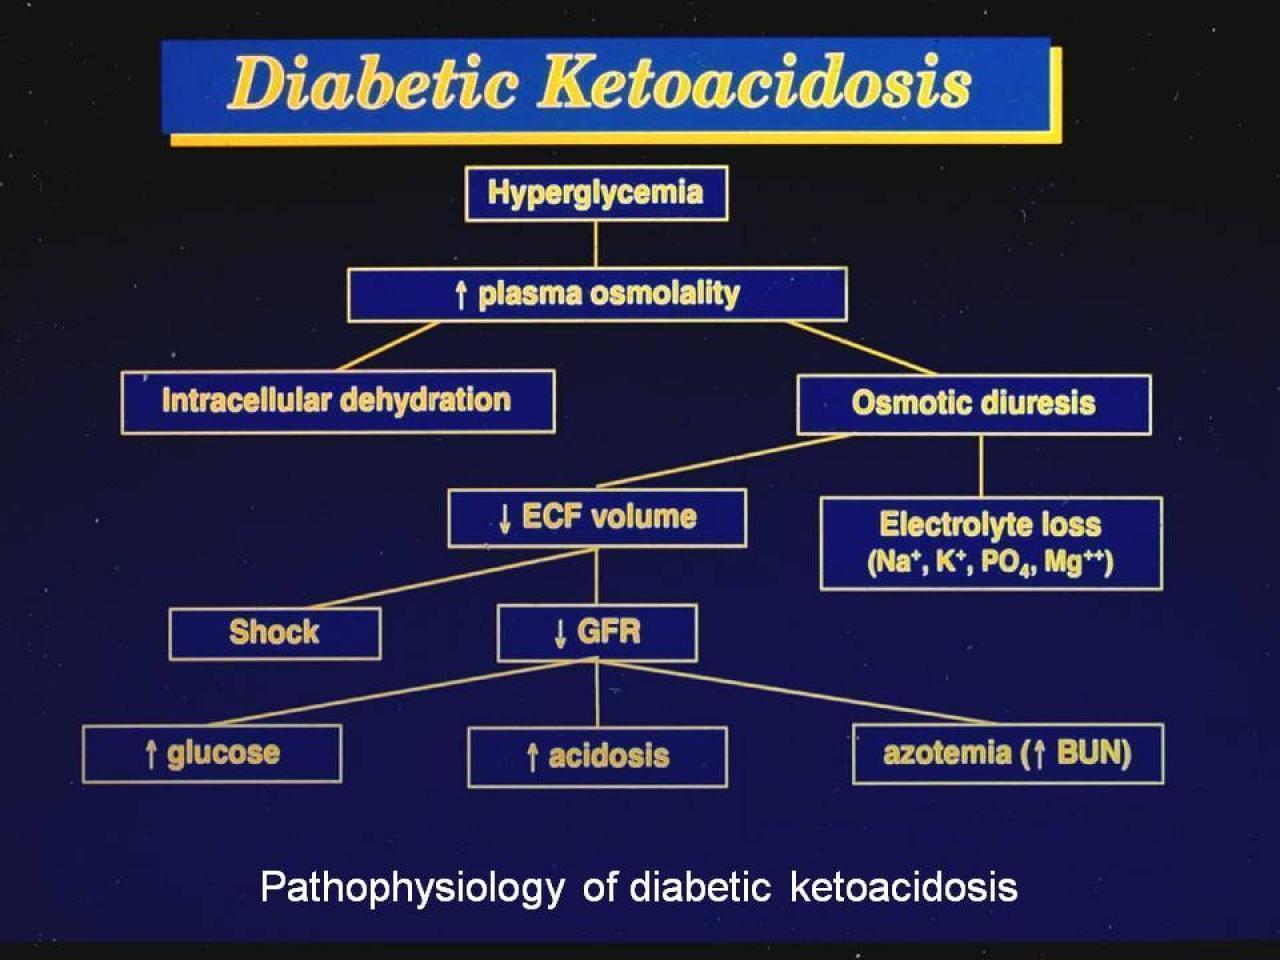 metformin and diabetes ketoacidosis